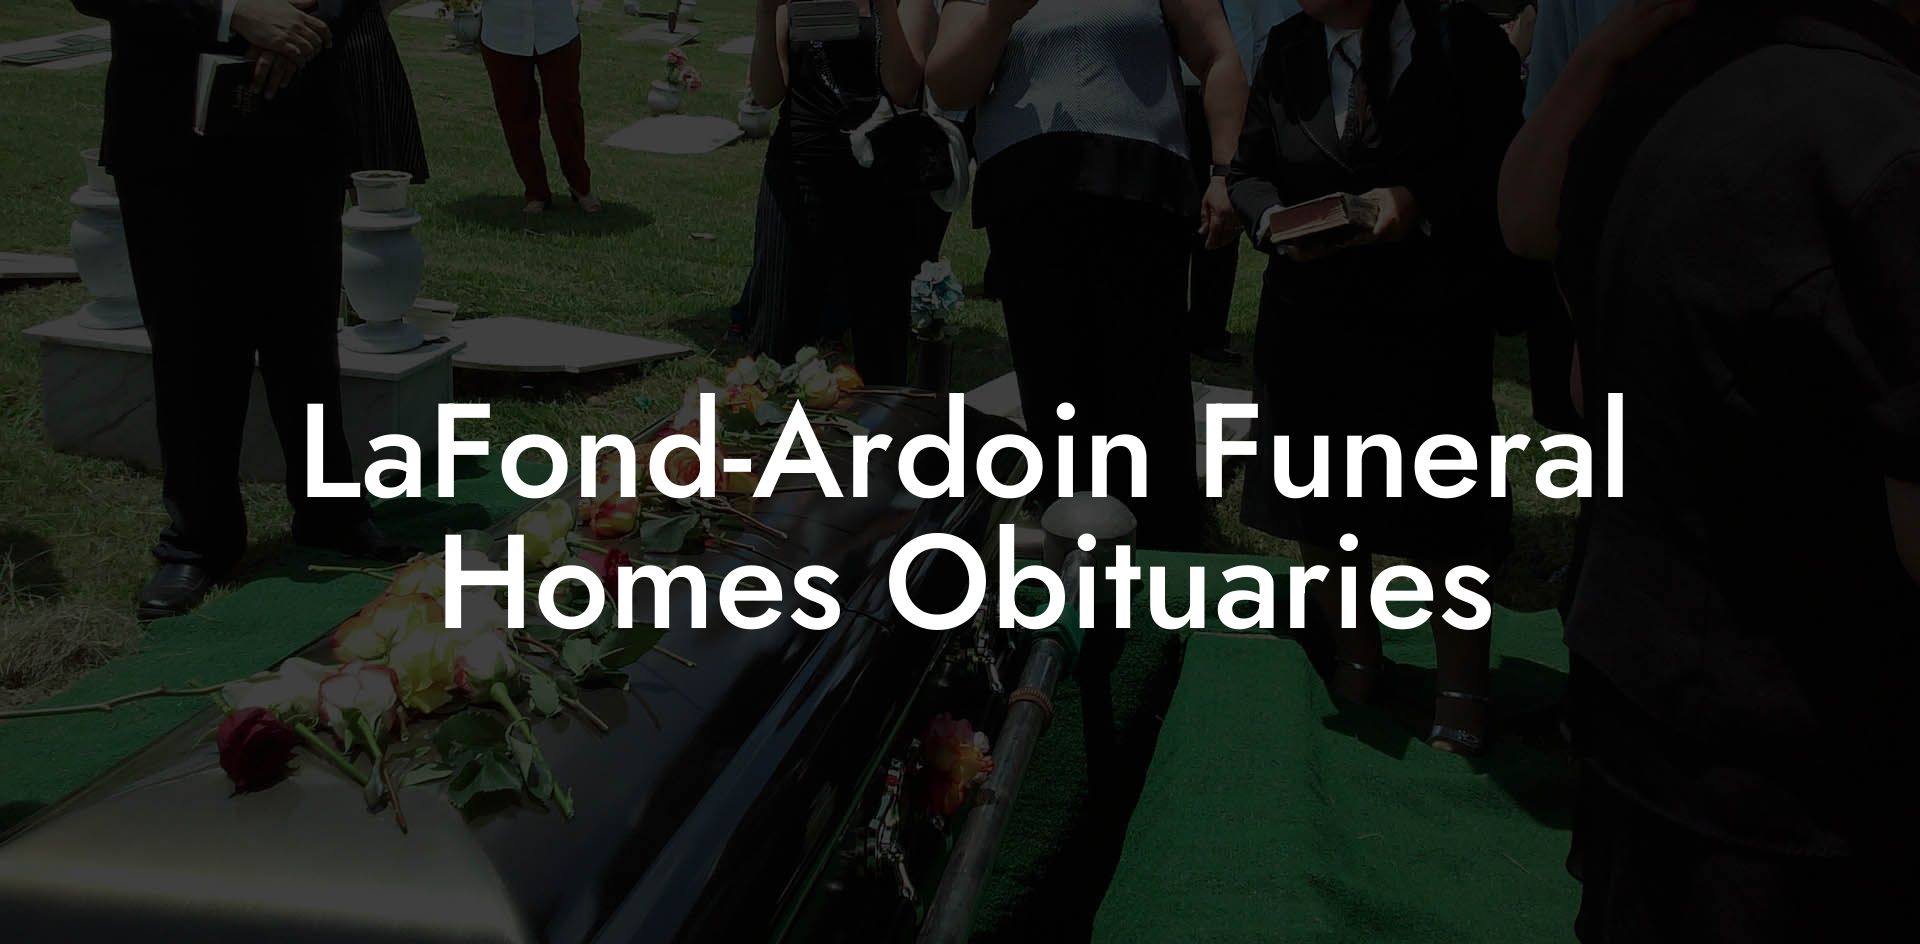 LaFond-Ardoin Funeral Homes Obituaries